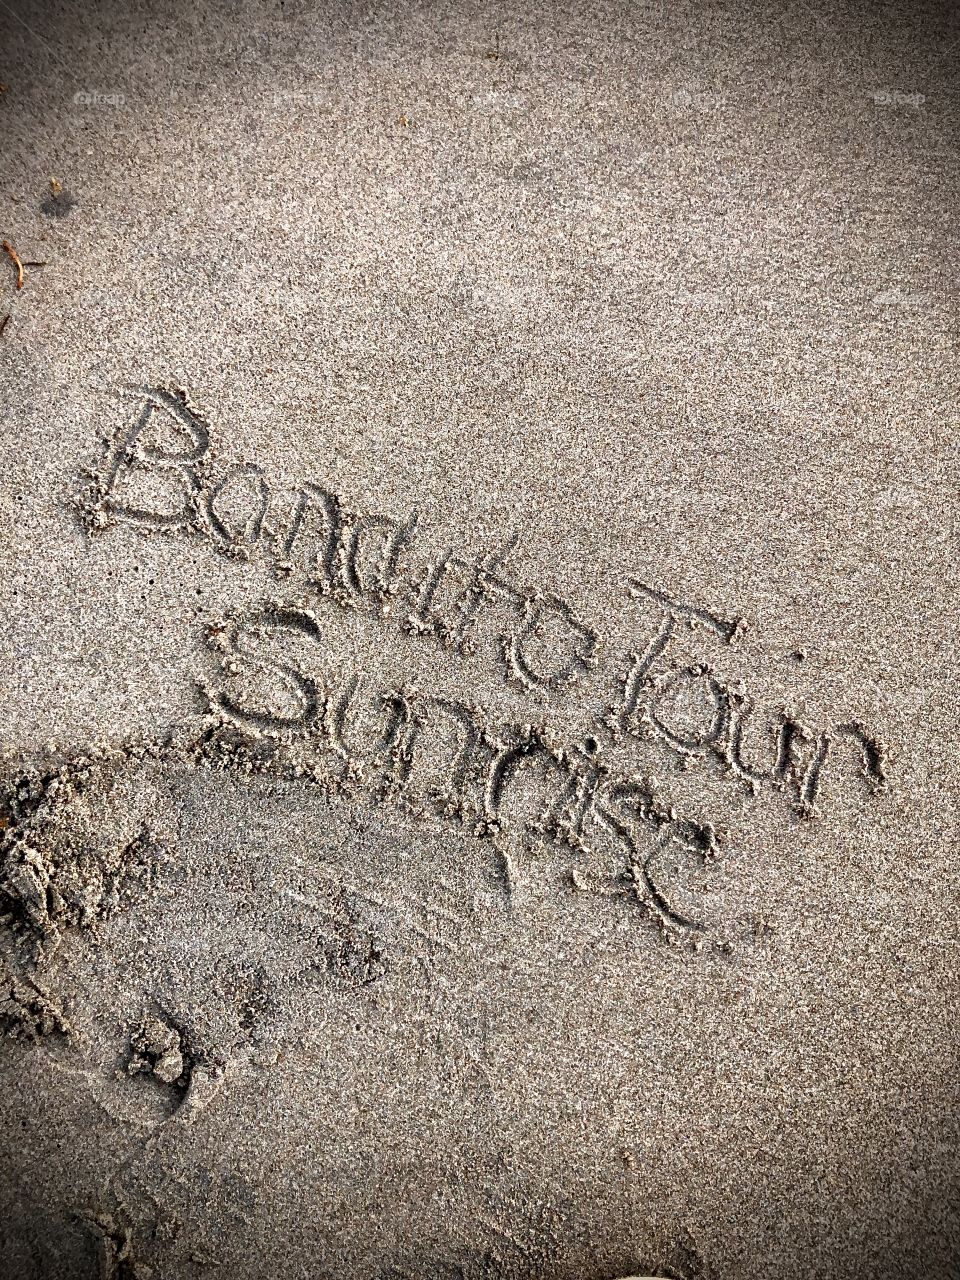 Twenty One Pilots Bandido Tour Written In The Sand 